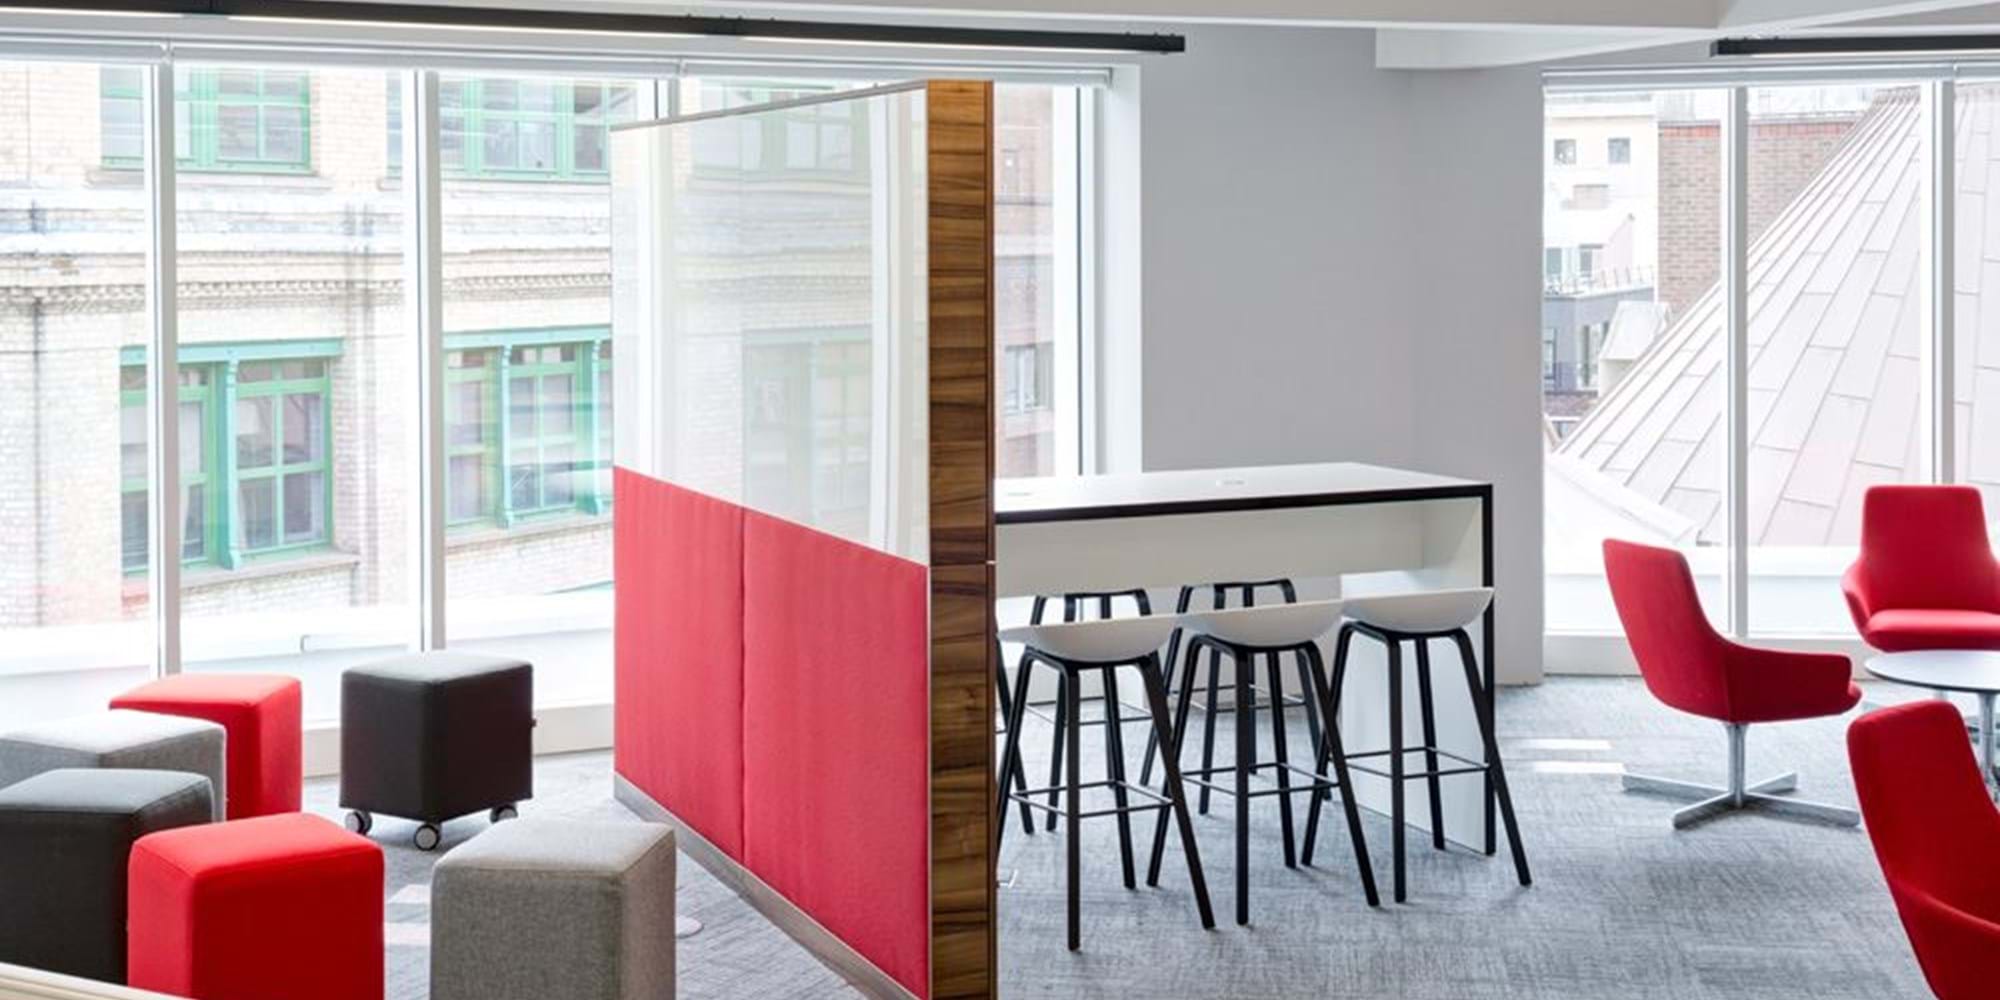 Modus Workspace office design, fit out and refurbishment - Neu Lion - NeuLion 07 highres sRGB.jpg